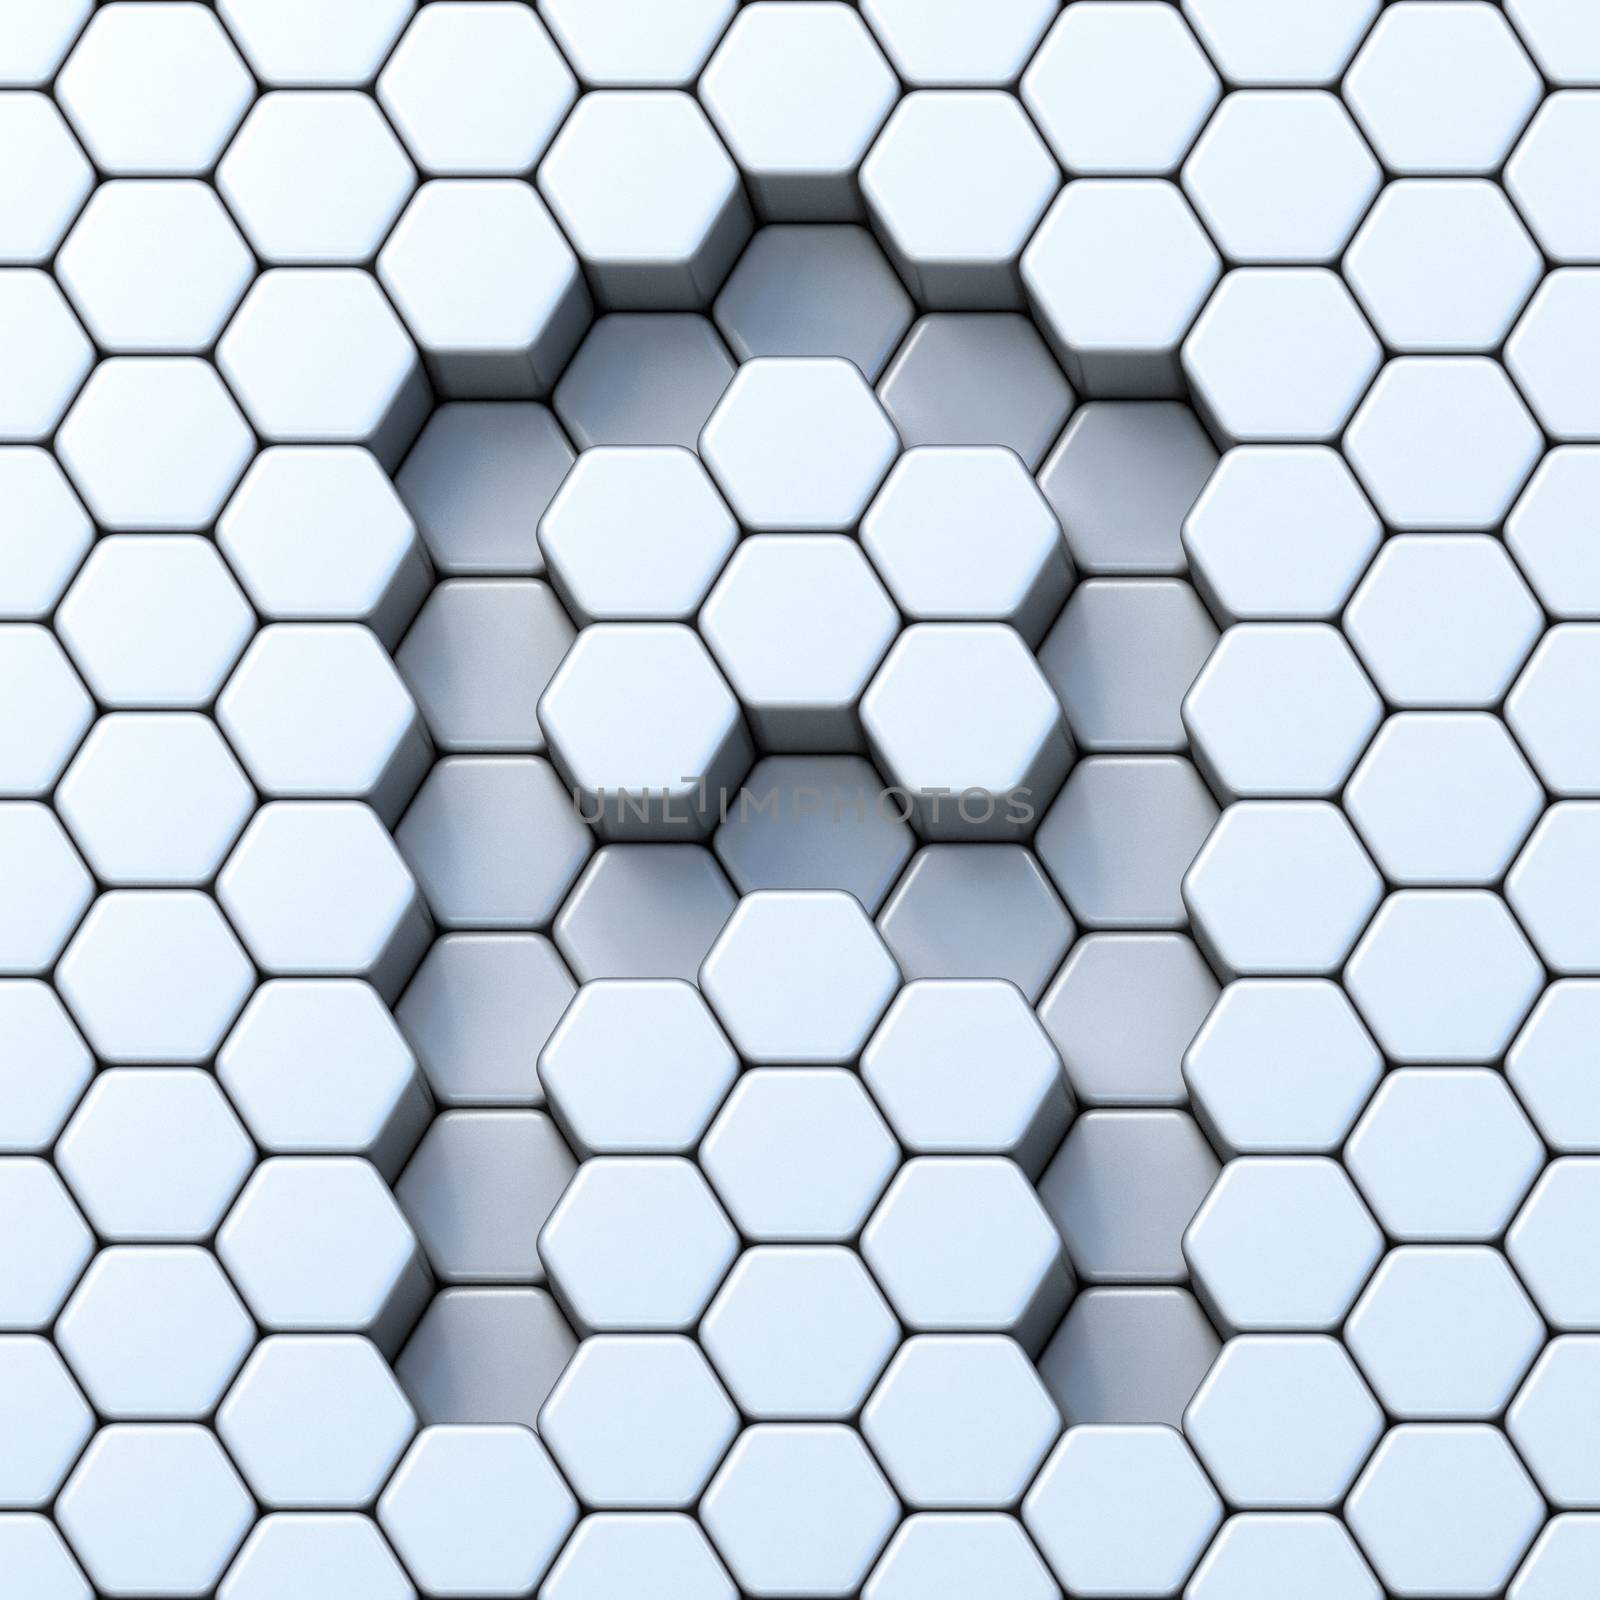 Hexagonal grid letter A 3D by djmilic